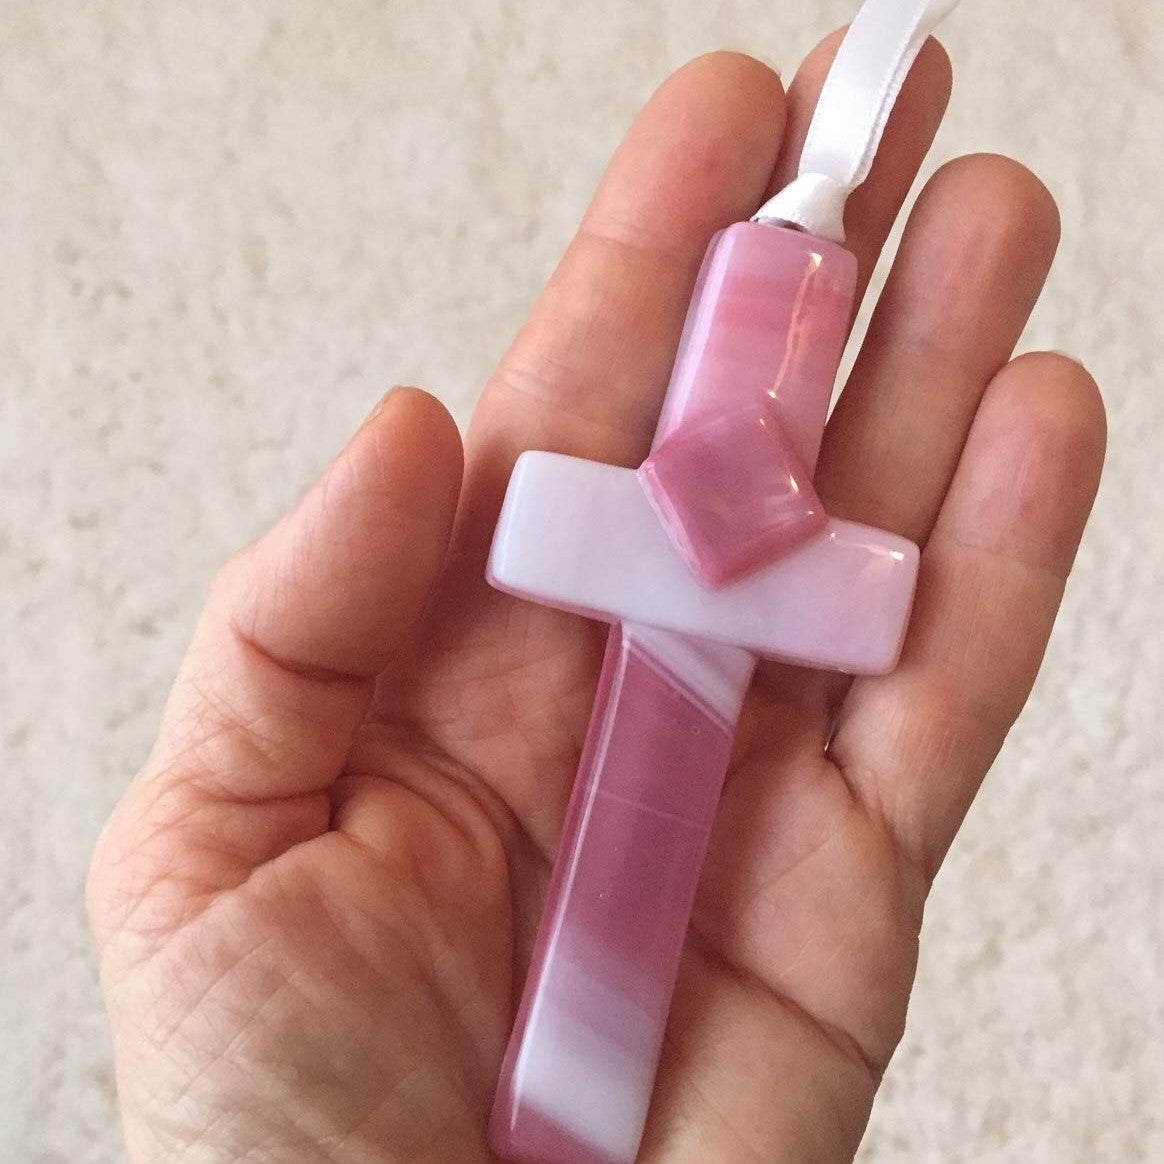 Pastor&#39;s Wife Cross: Handmade Glass Cross